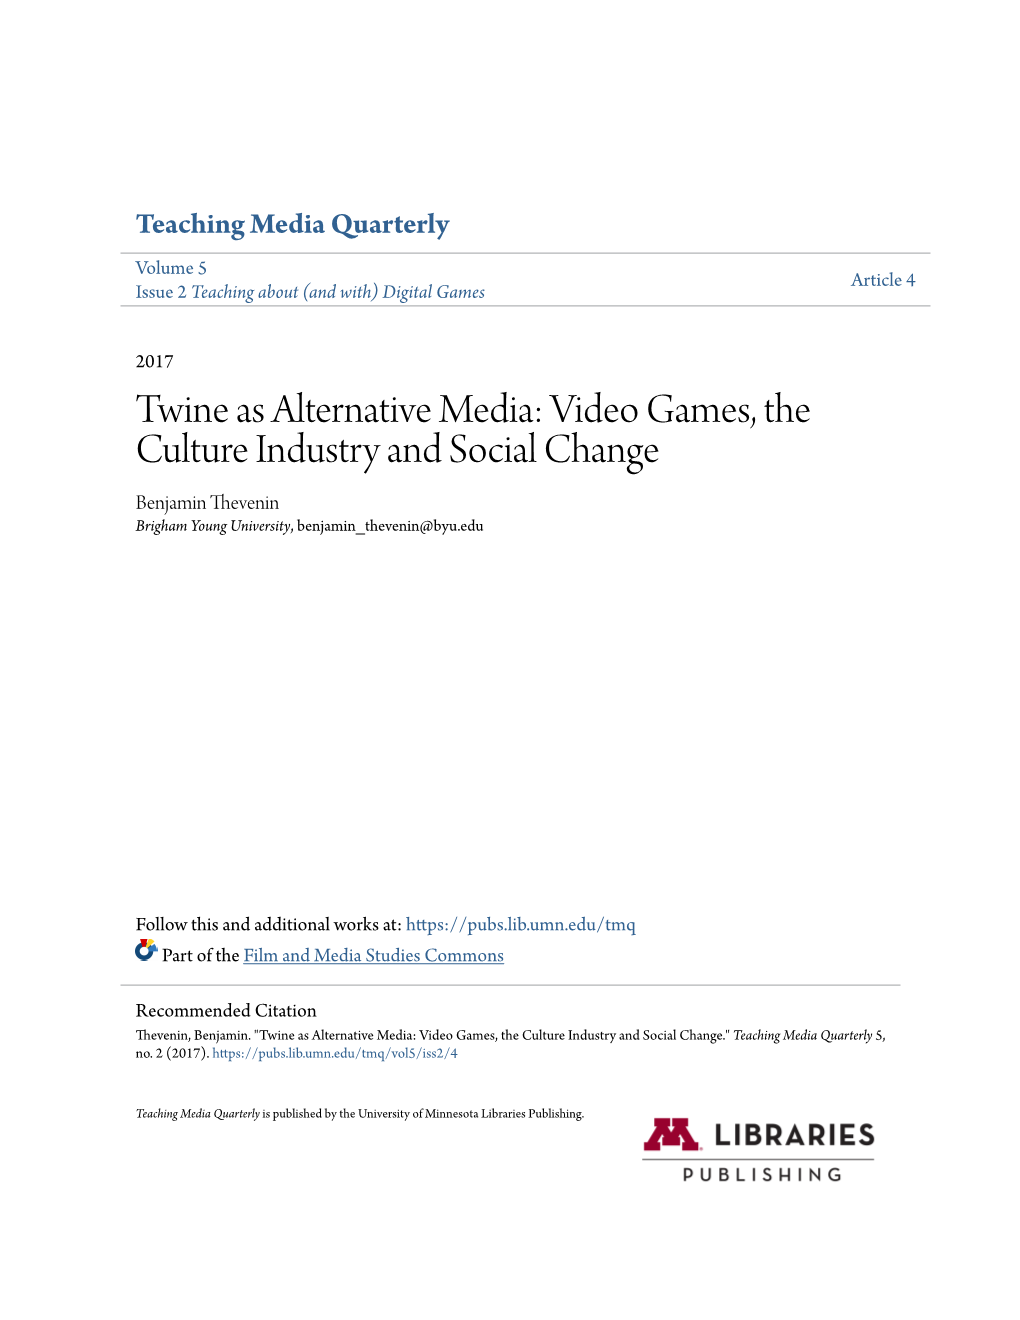 Twine As Alternative Media: Video Games, the Culture Industry and Social Change Benjamin Evenin Brigham Young University, Benjamin Thevenin@Byu.Edu